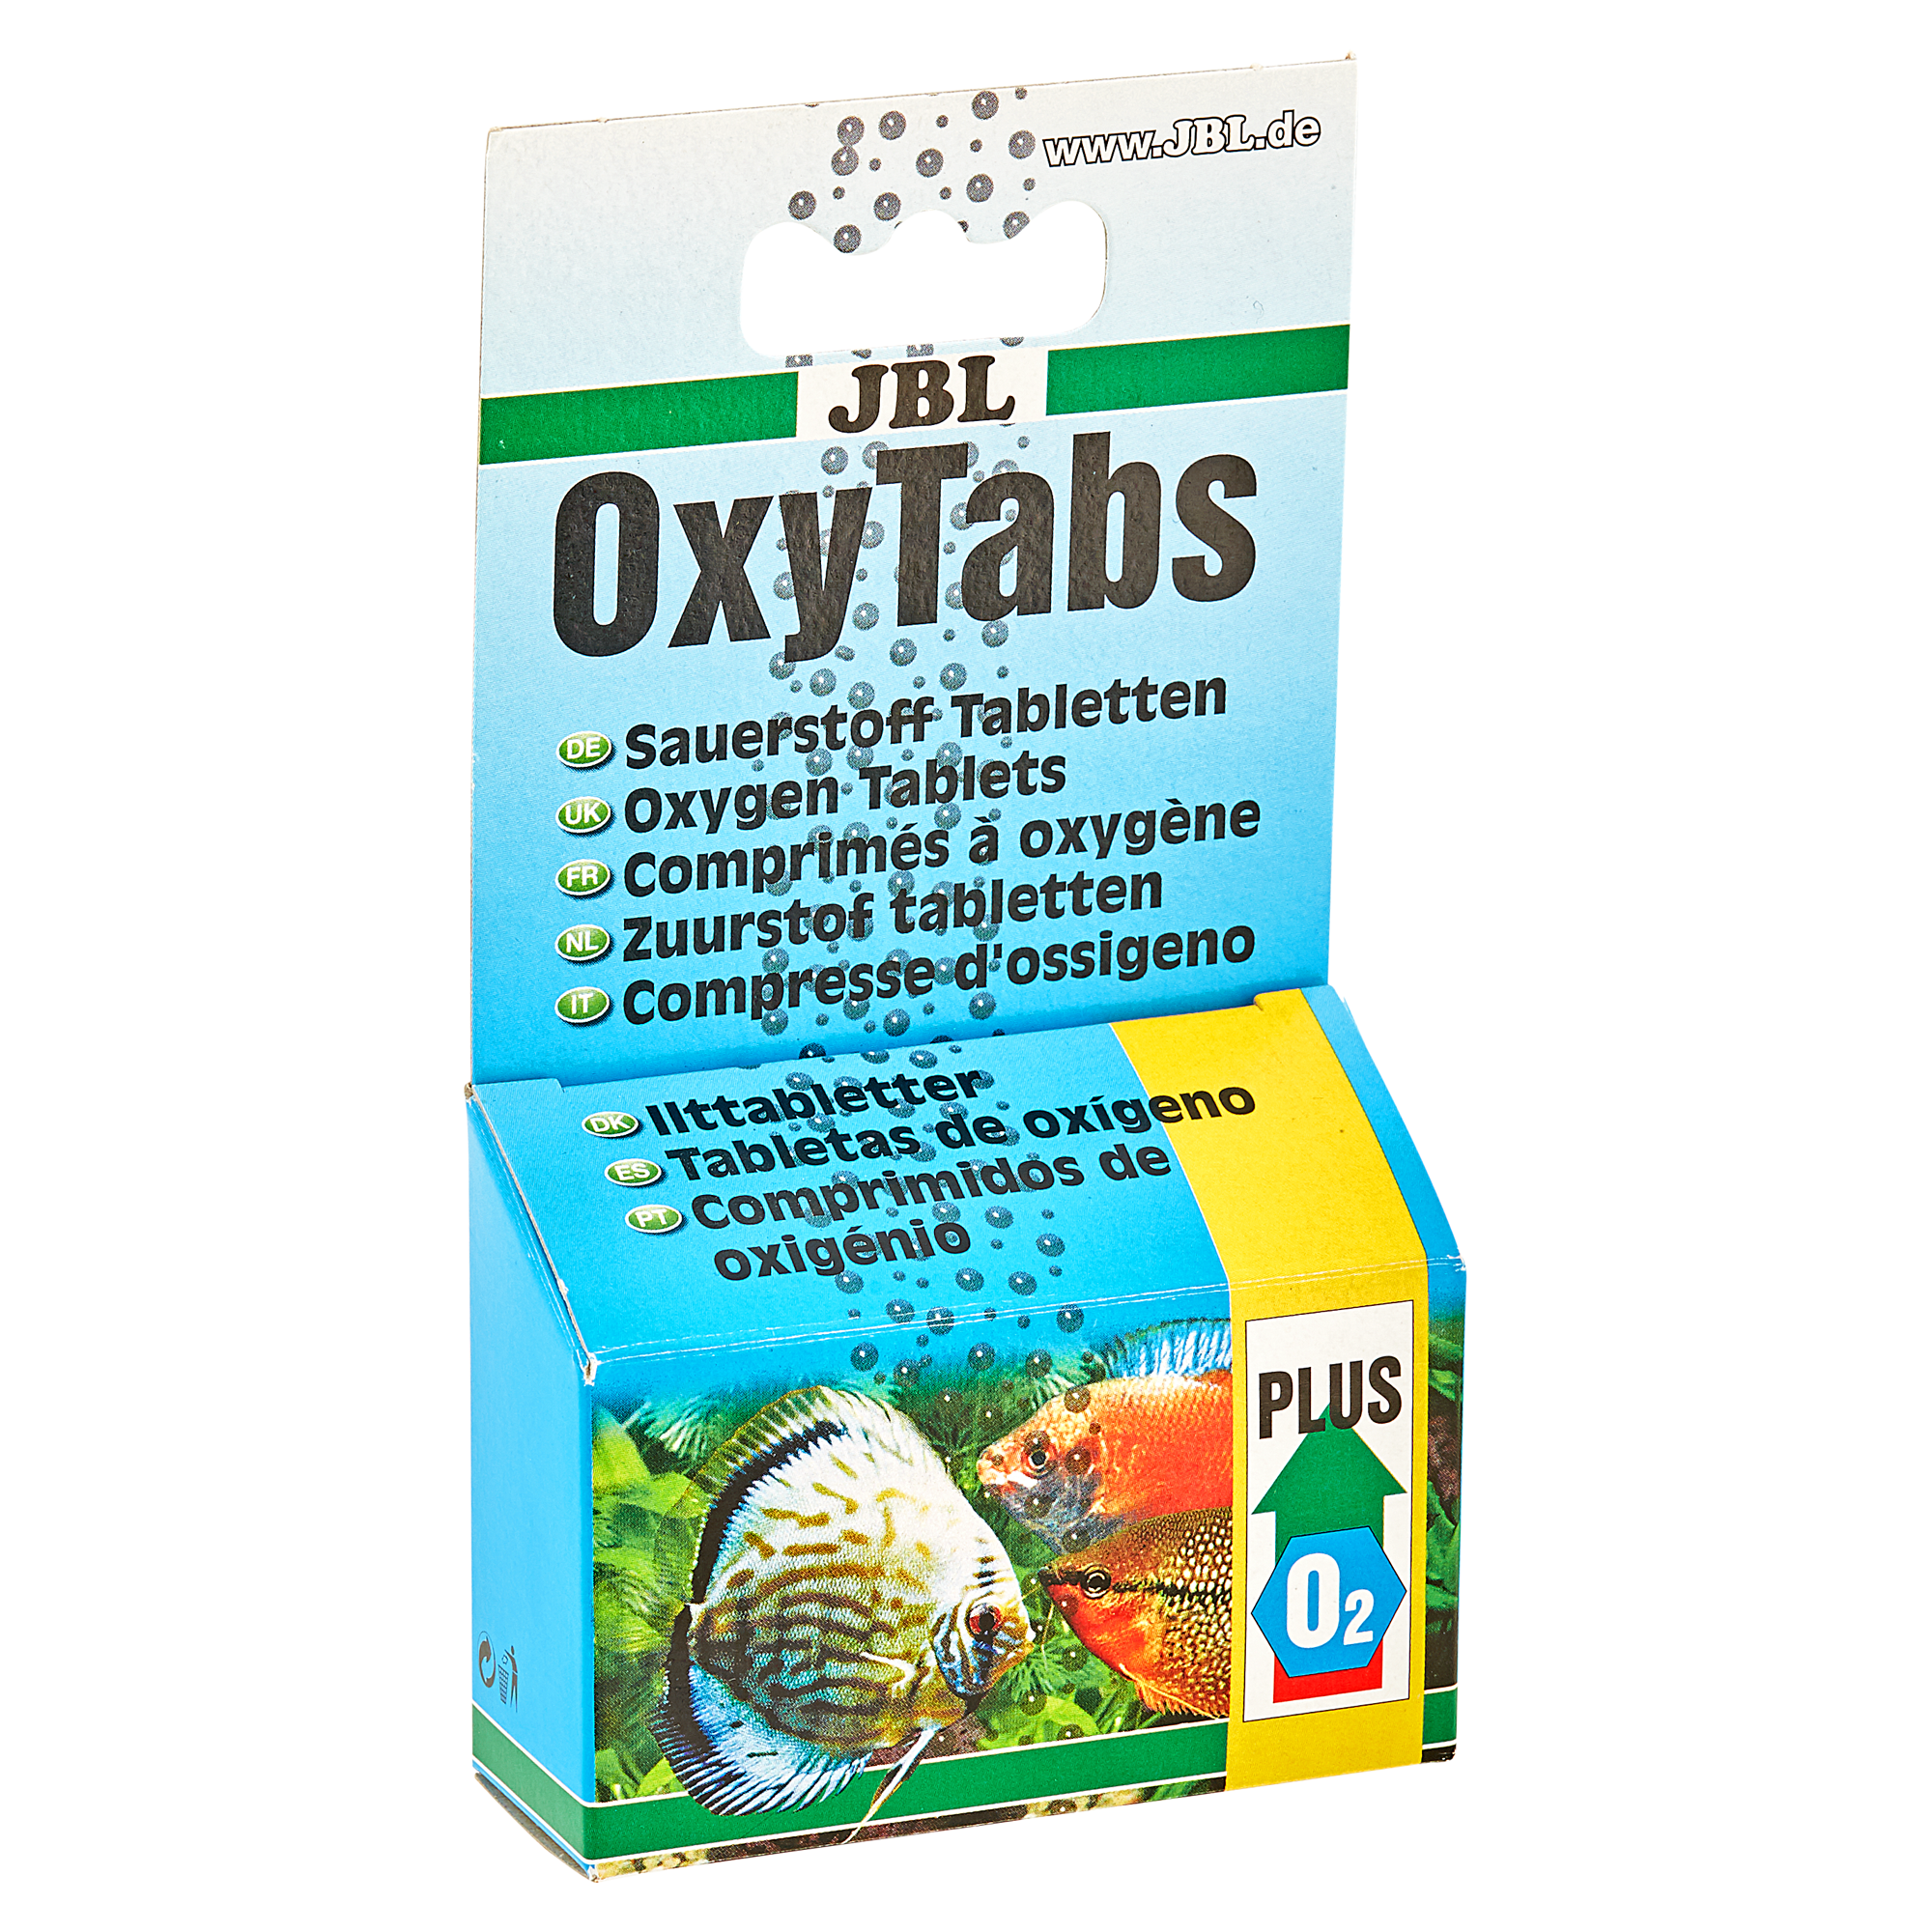 Sauerstoff-Tabletten "OxyTabs" 50 Stück + product picture